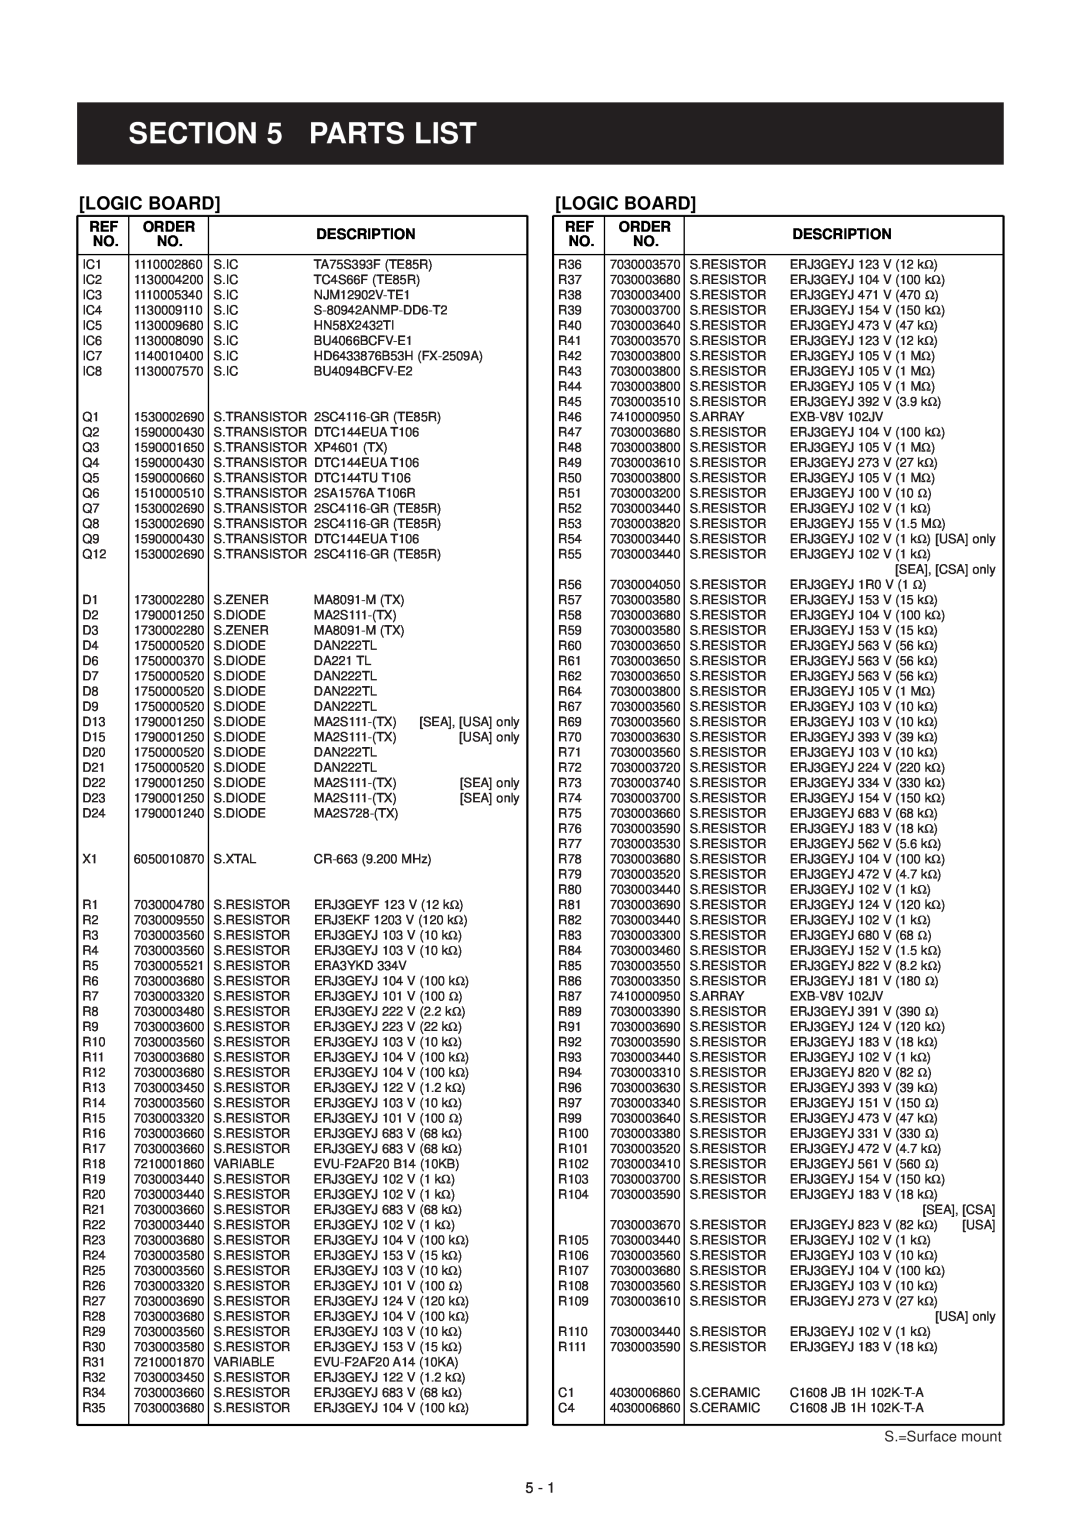 Polaroid IC-V8000 service manual Parts List, Logic Board, Order, Description 